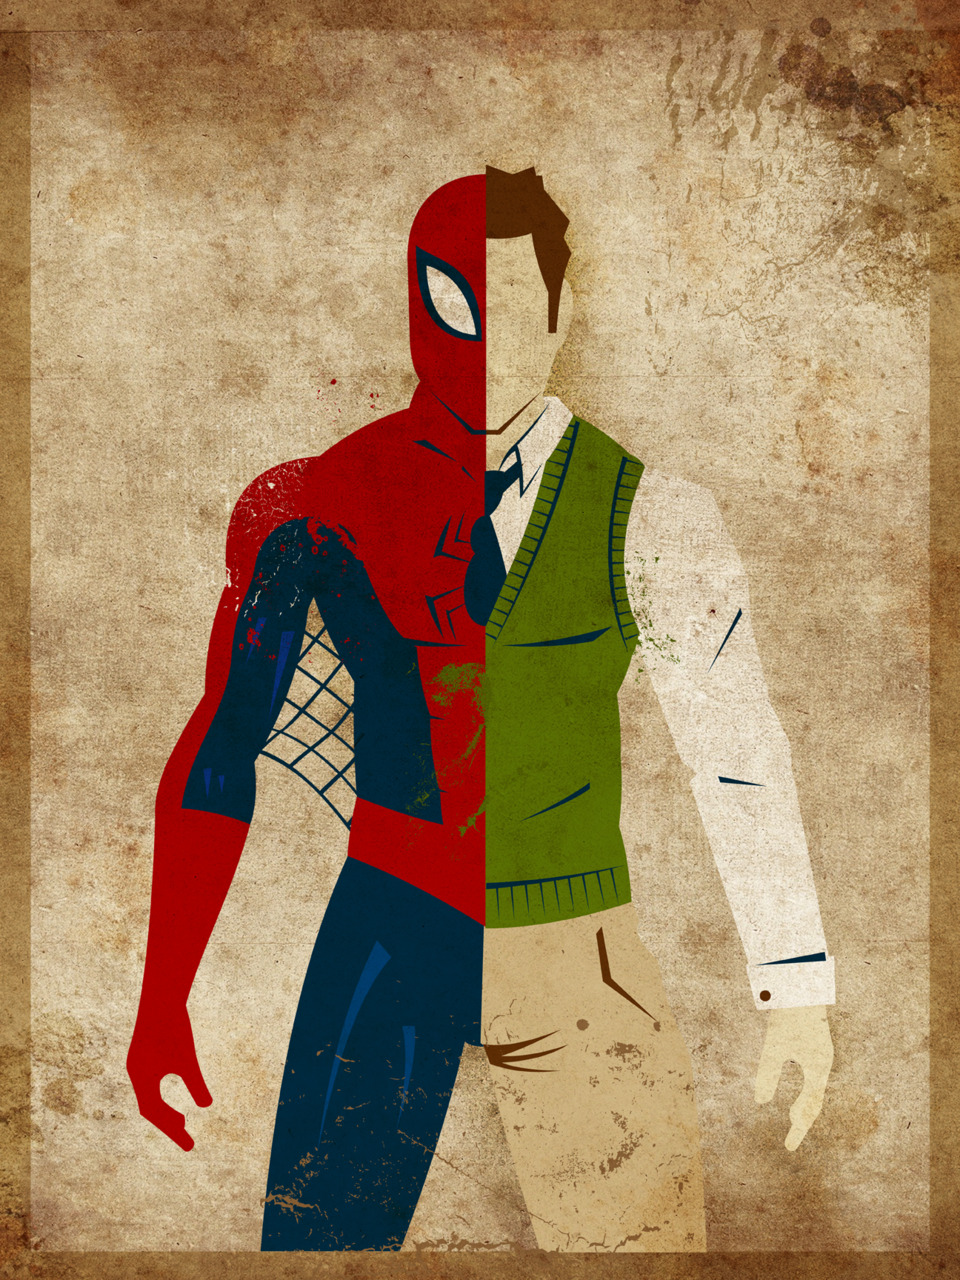 http://bensbargains.net/thecheckout/wp-content/uploads/2013/07/spider-man-peter-parker.jpg